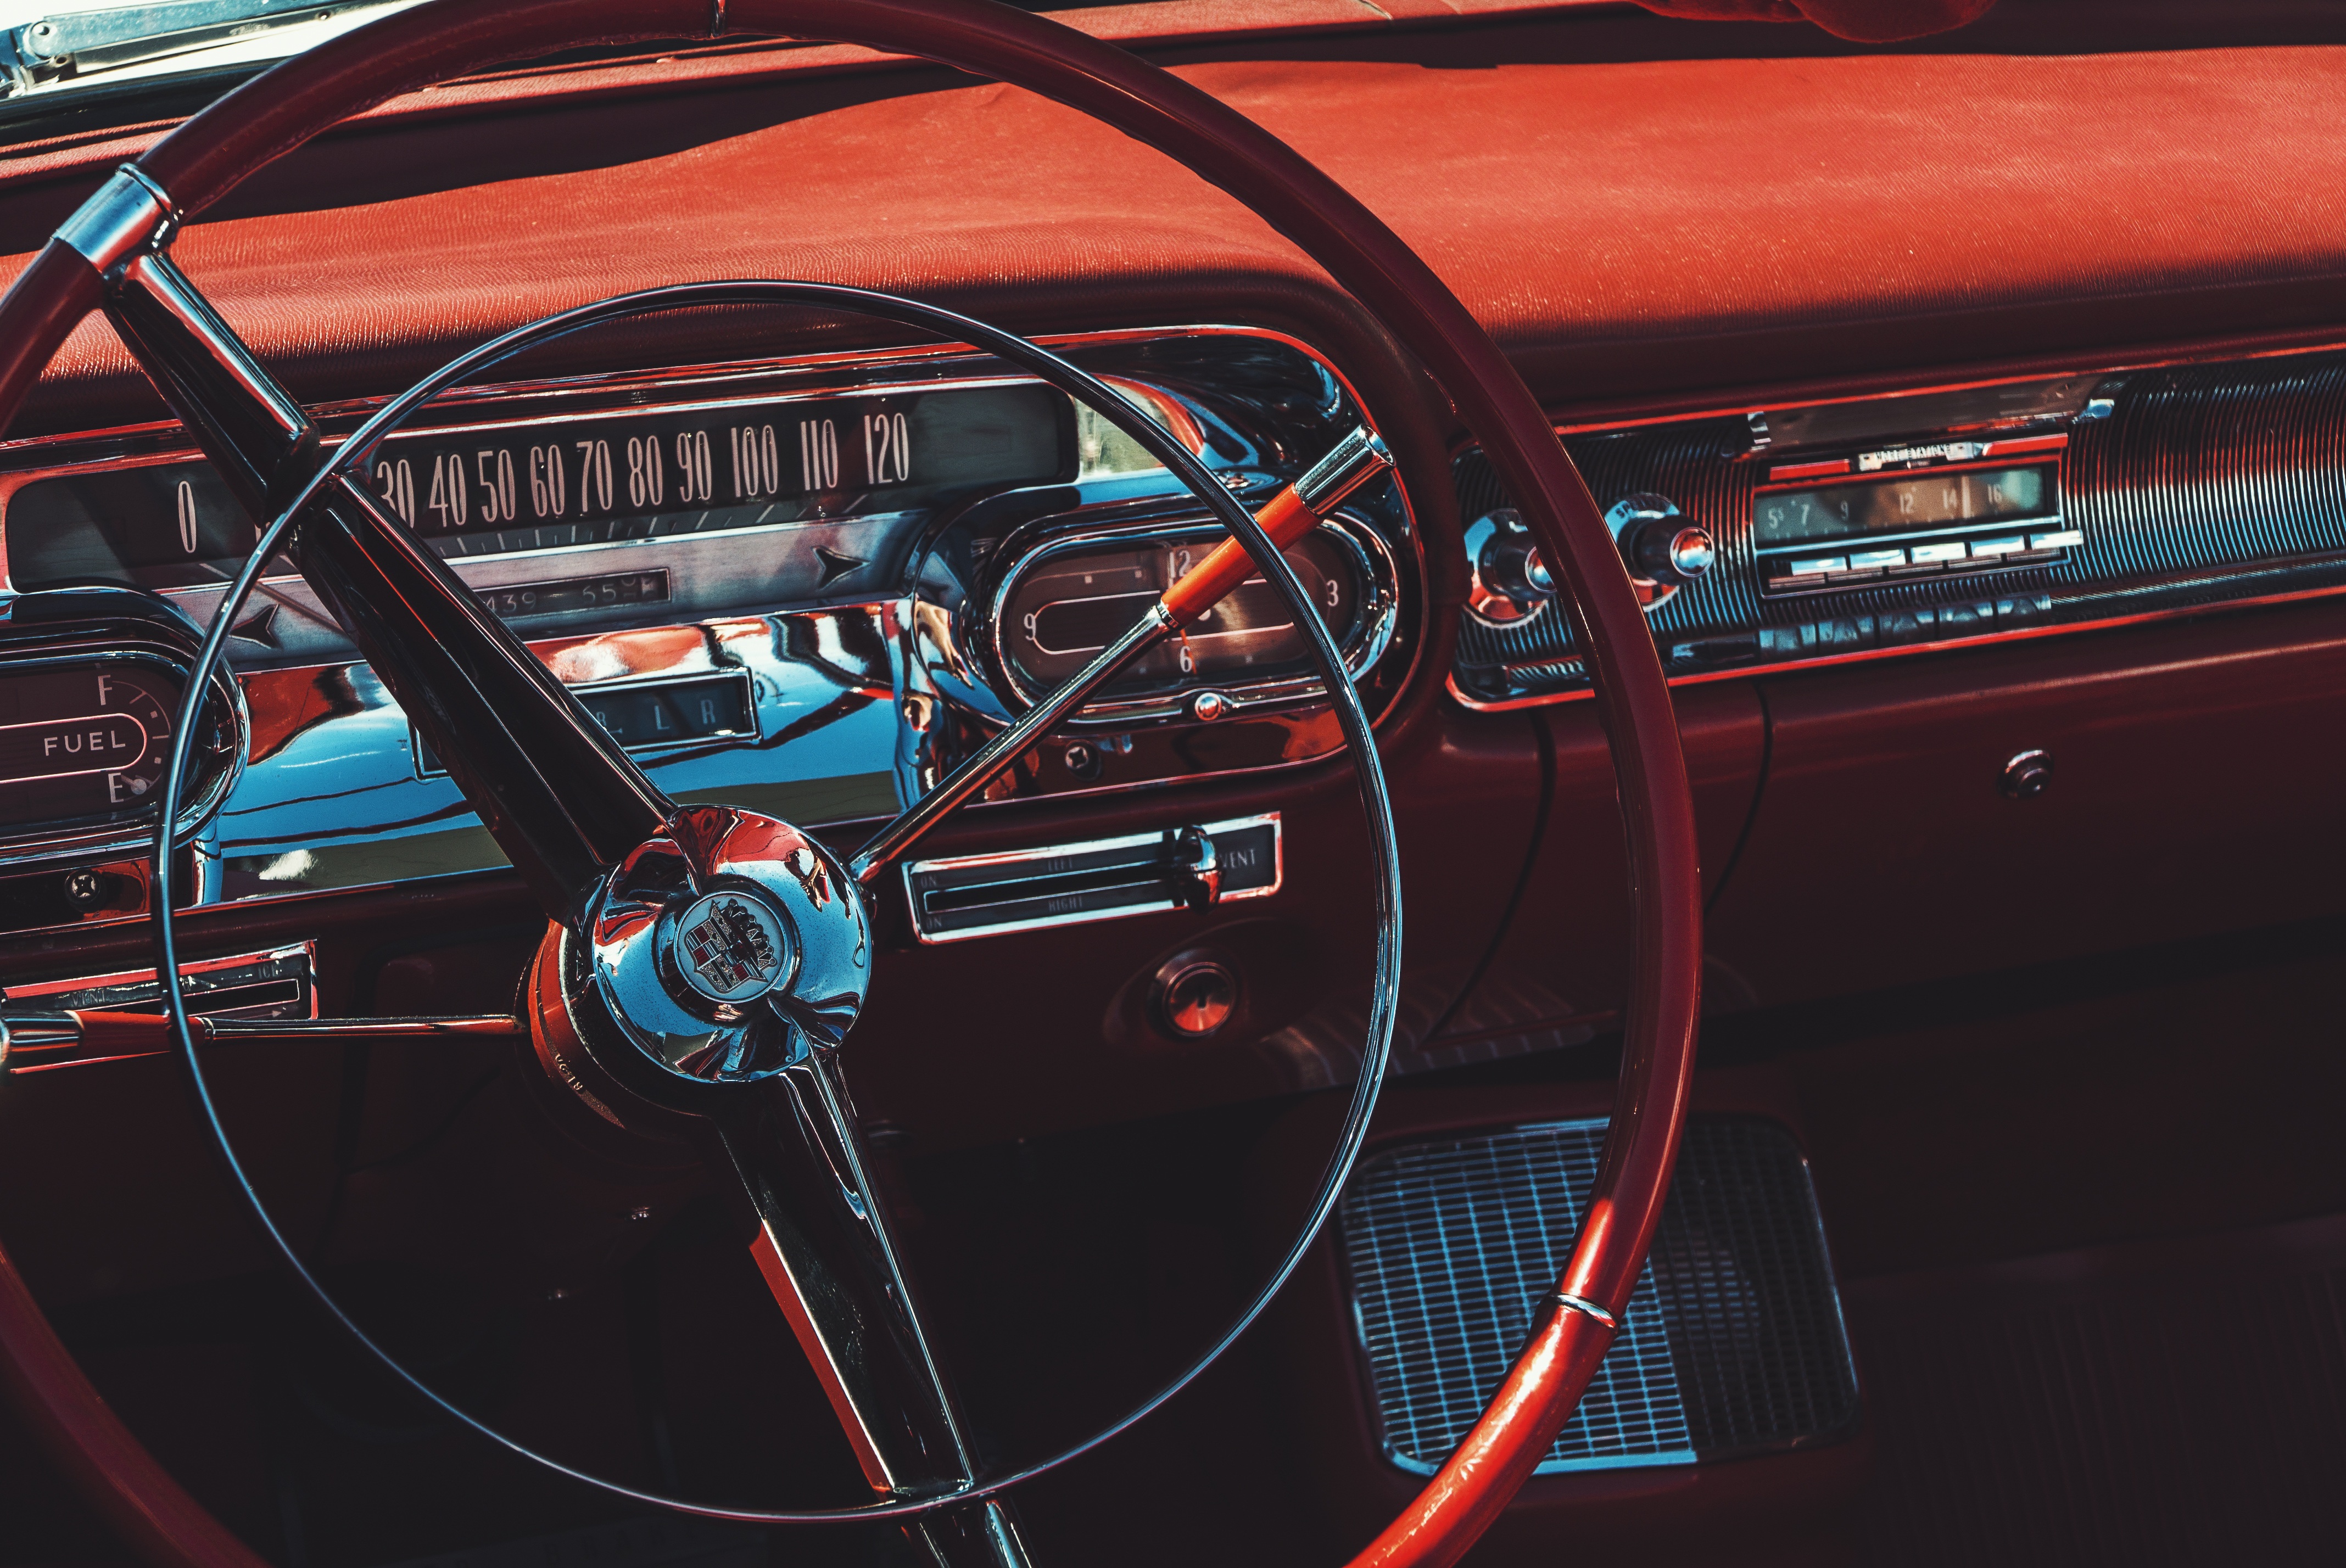 General 4272x2856 car classic car oldtimers vehicle interior car interior steering wheel Cadillac Cadillac Series 70 1950s speedometer